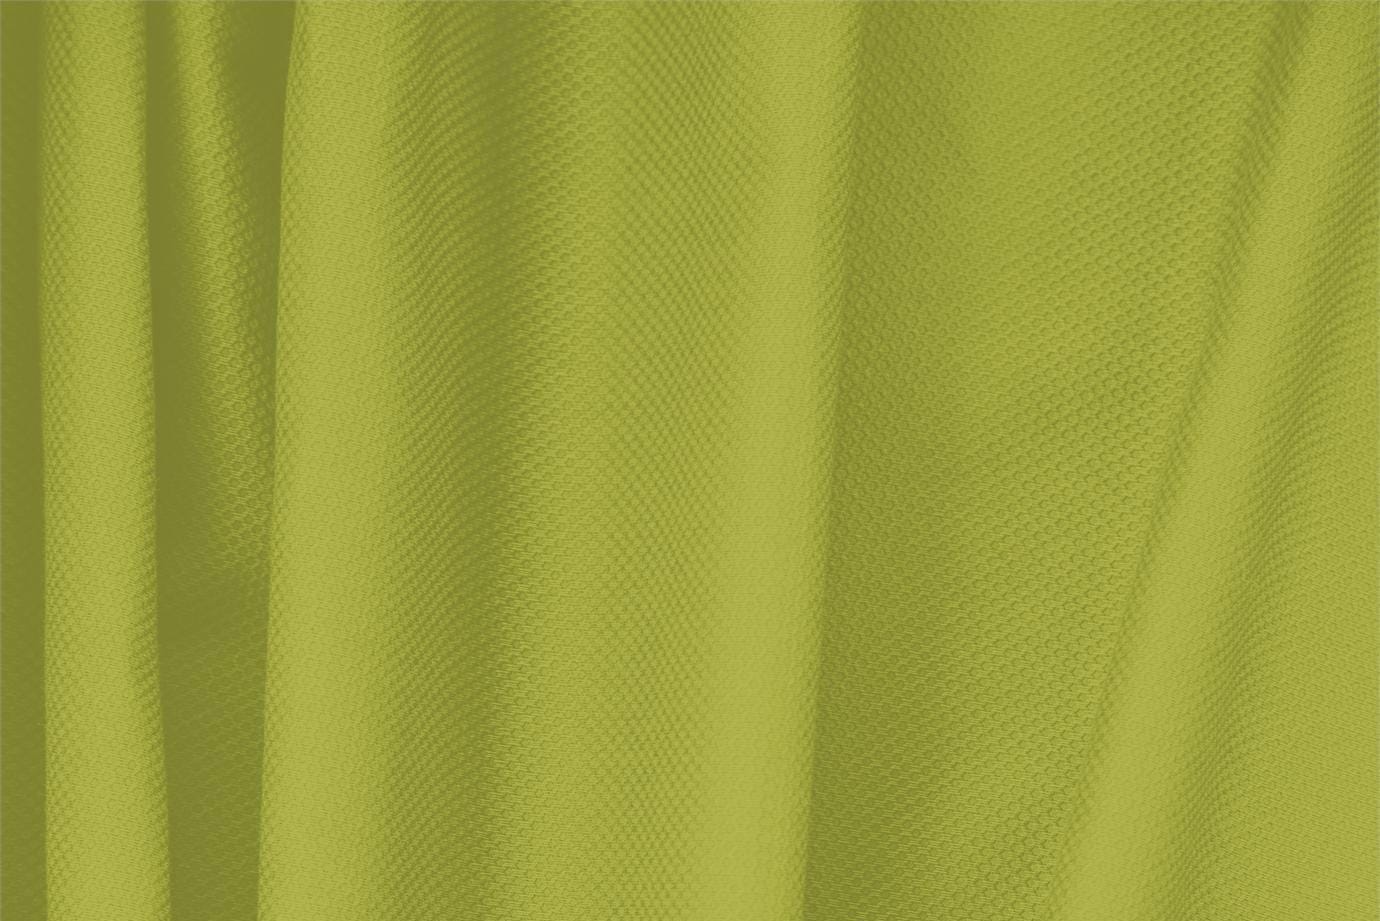 Acid Green Cotton, Stretch Pique Stretch fabric for dressmaking